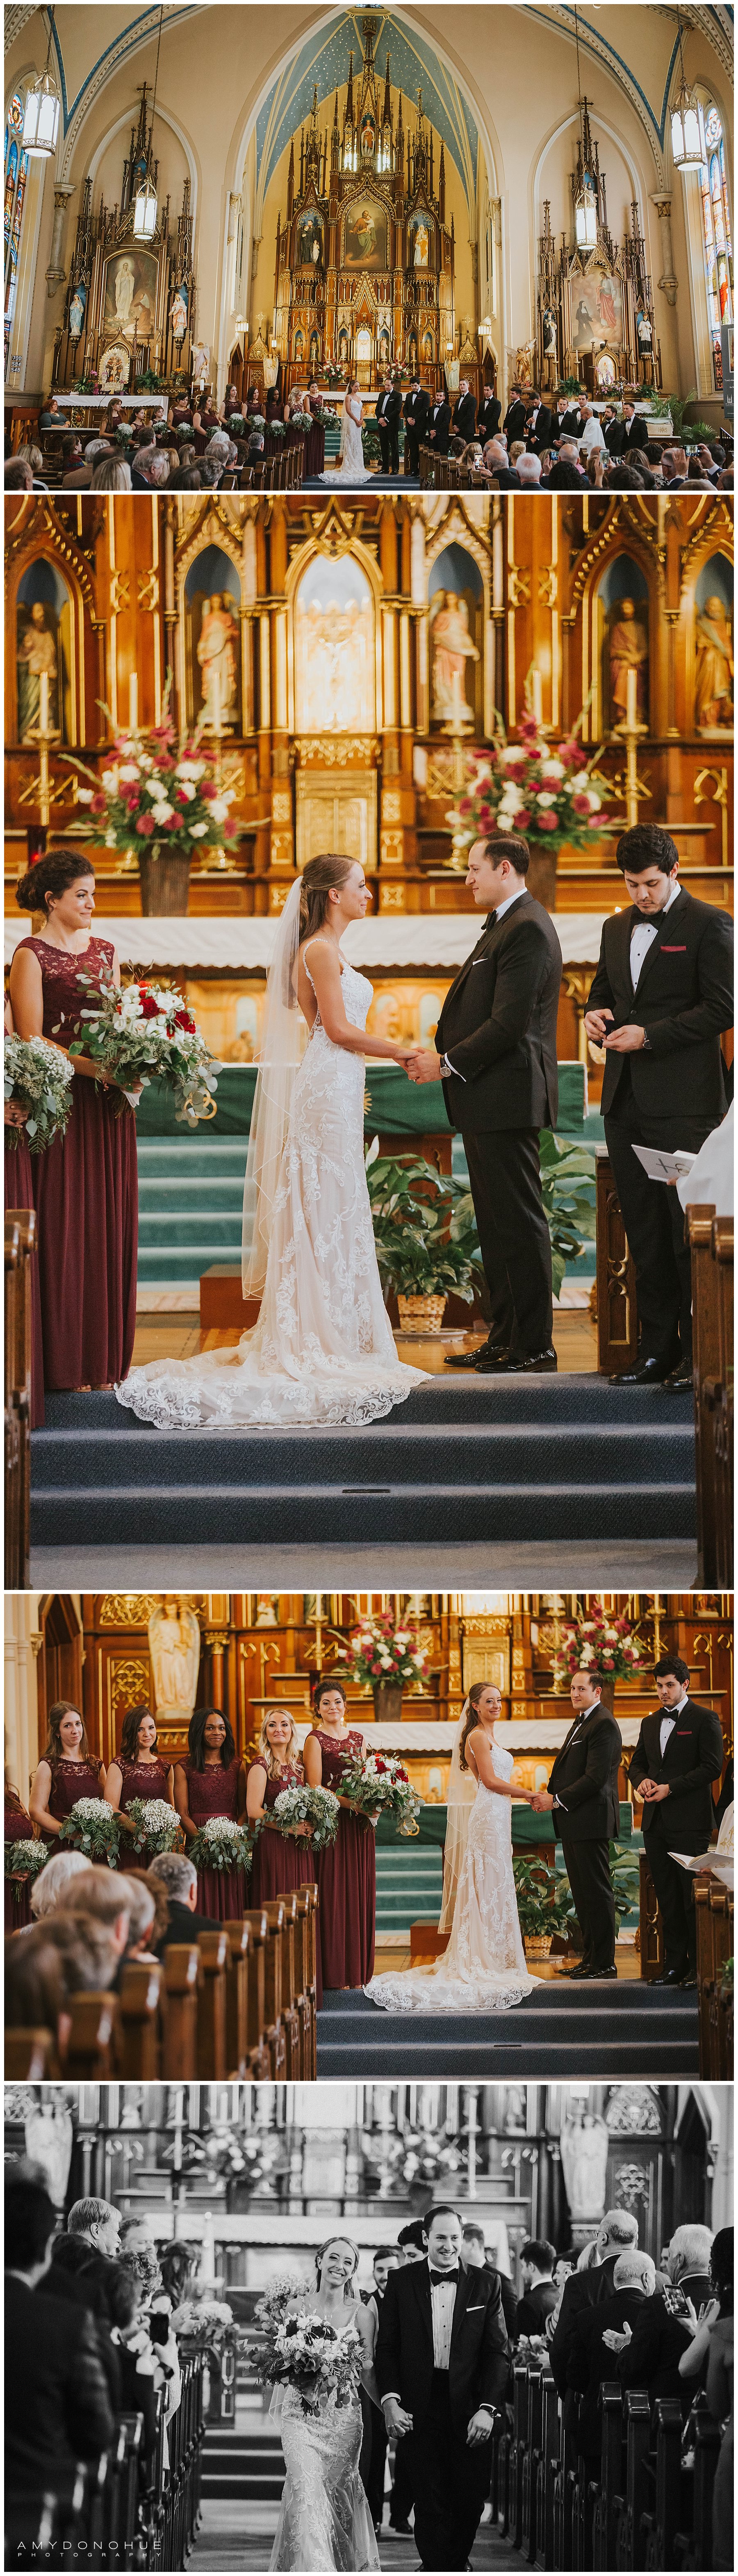 Ceremony | Louisville, Kentucky Wedding Photographer | © Amy Donohue Photography